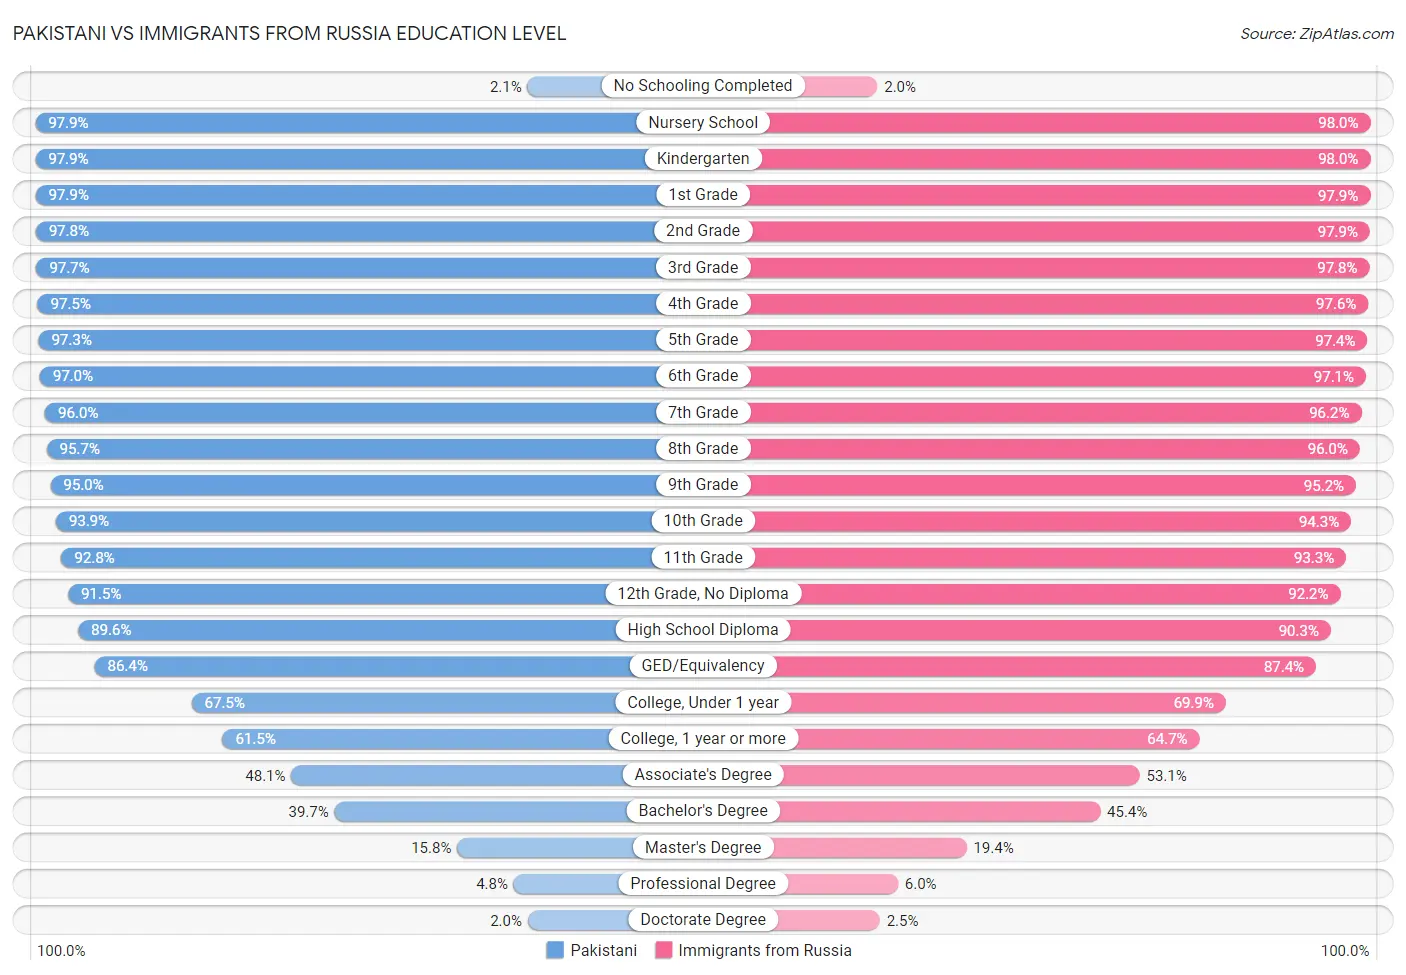 Pakistani vs Immigrants from Russia Education Level